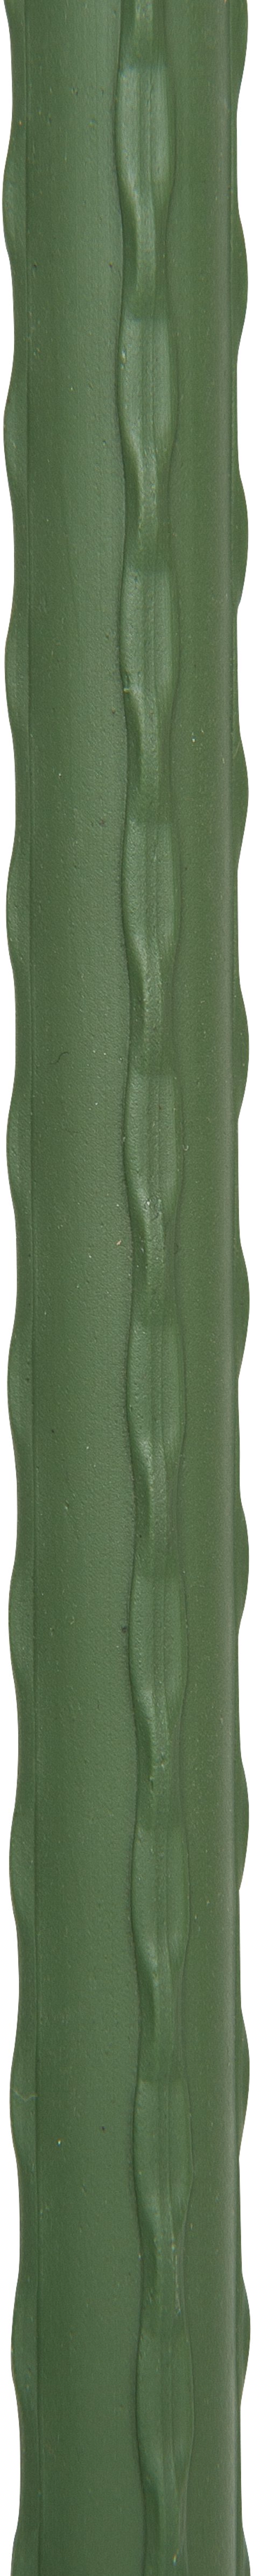 WINDHAGER Pflanzstab 11 mm x 120 cm, grün